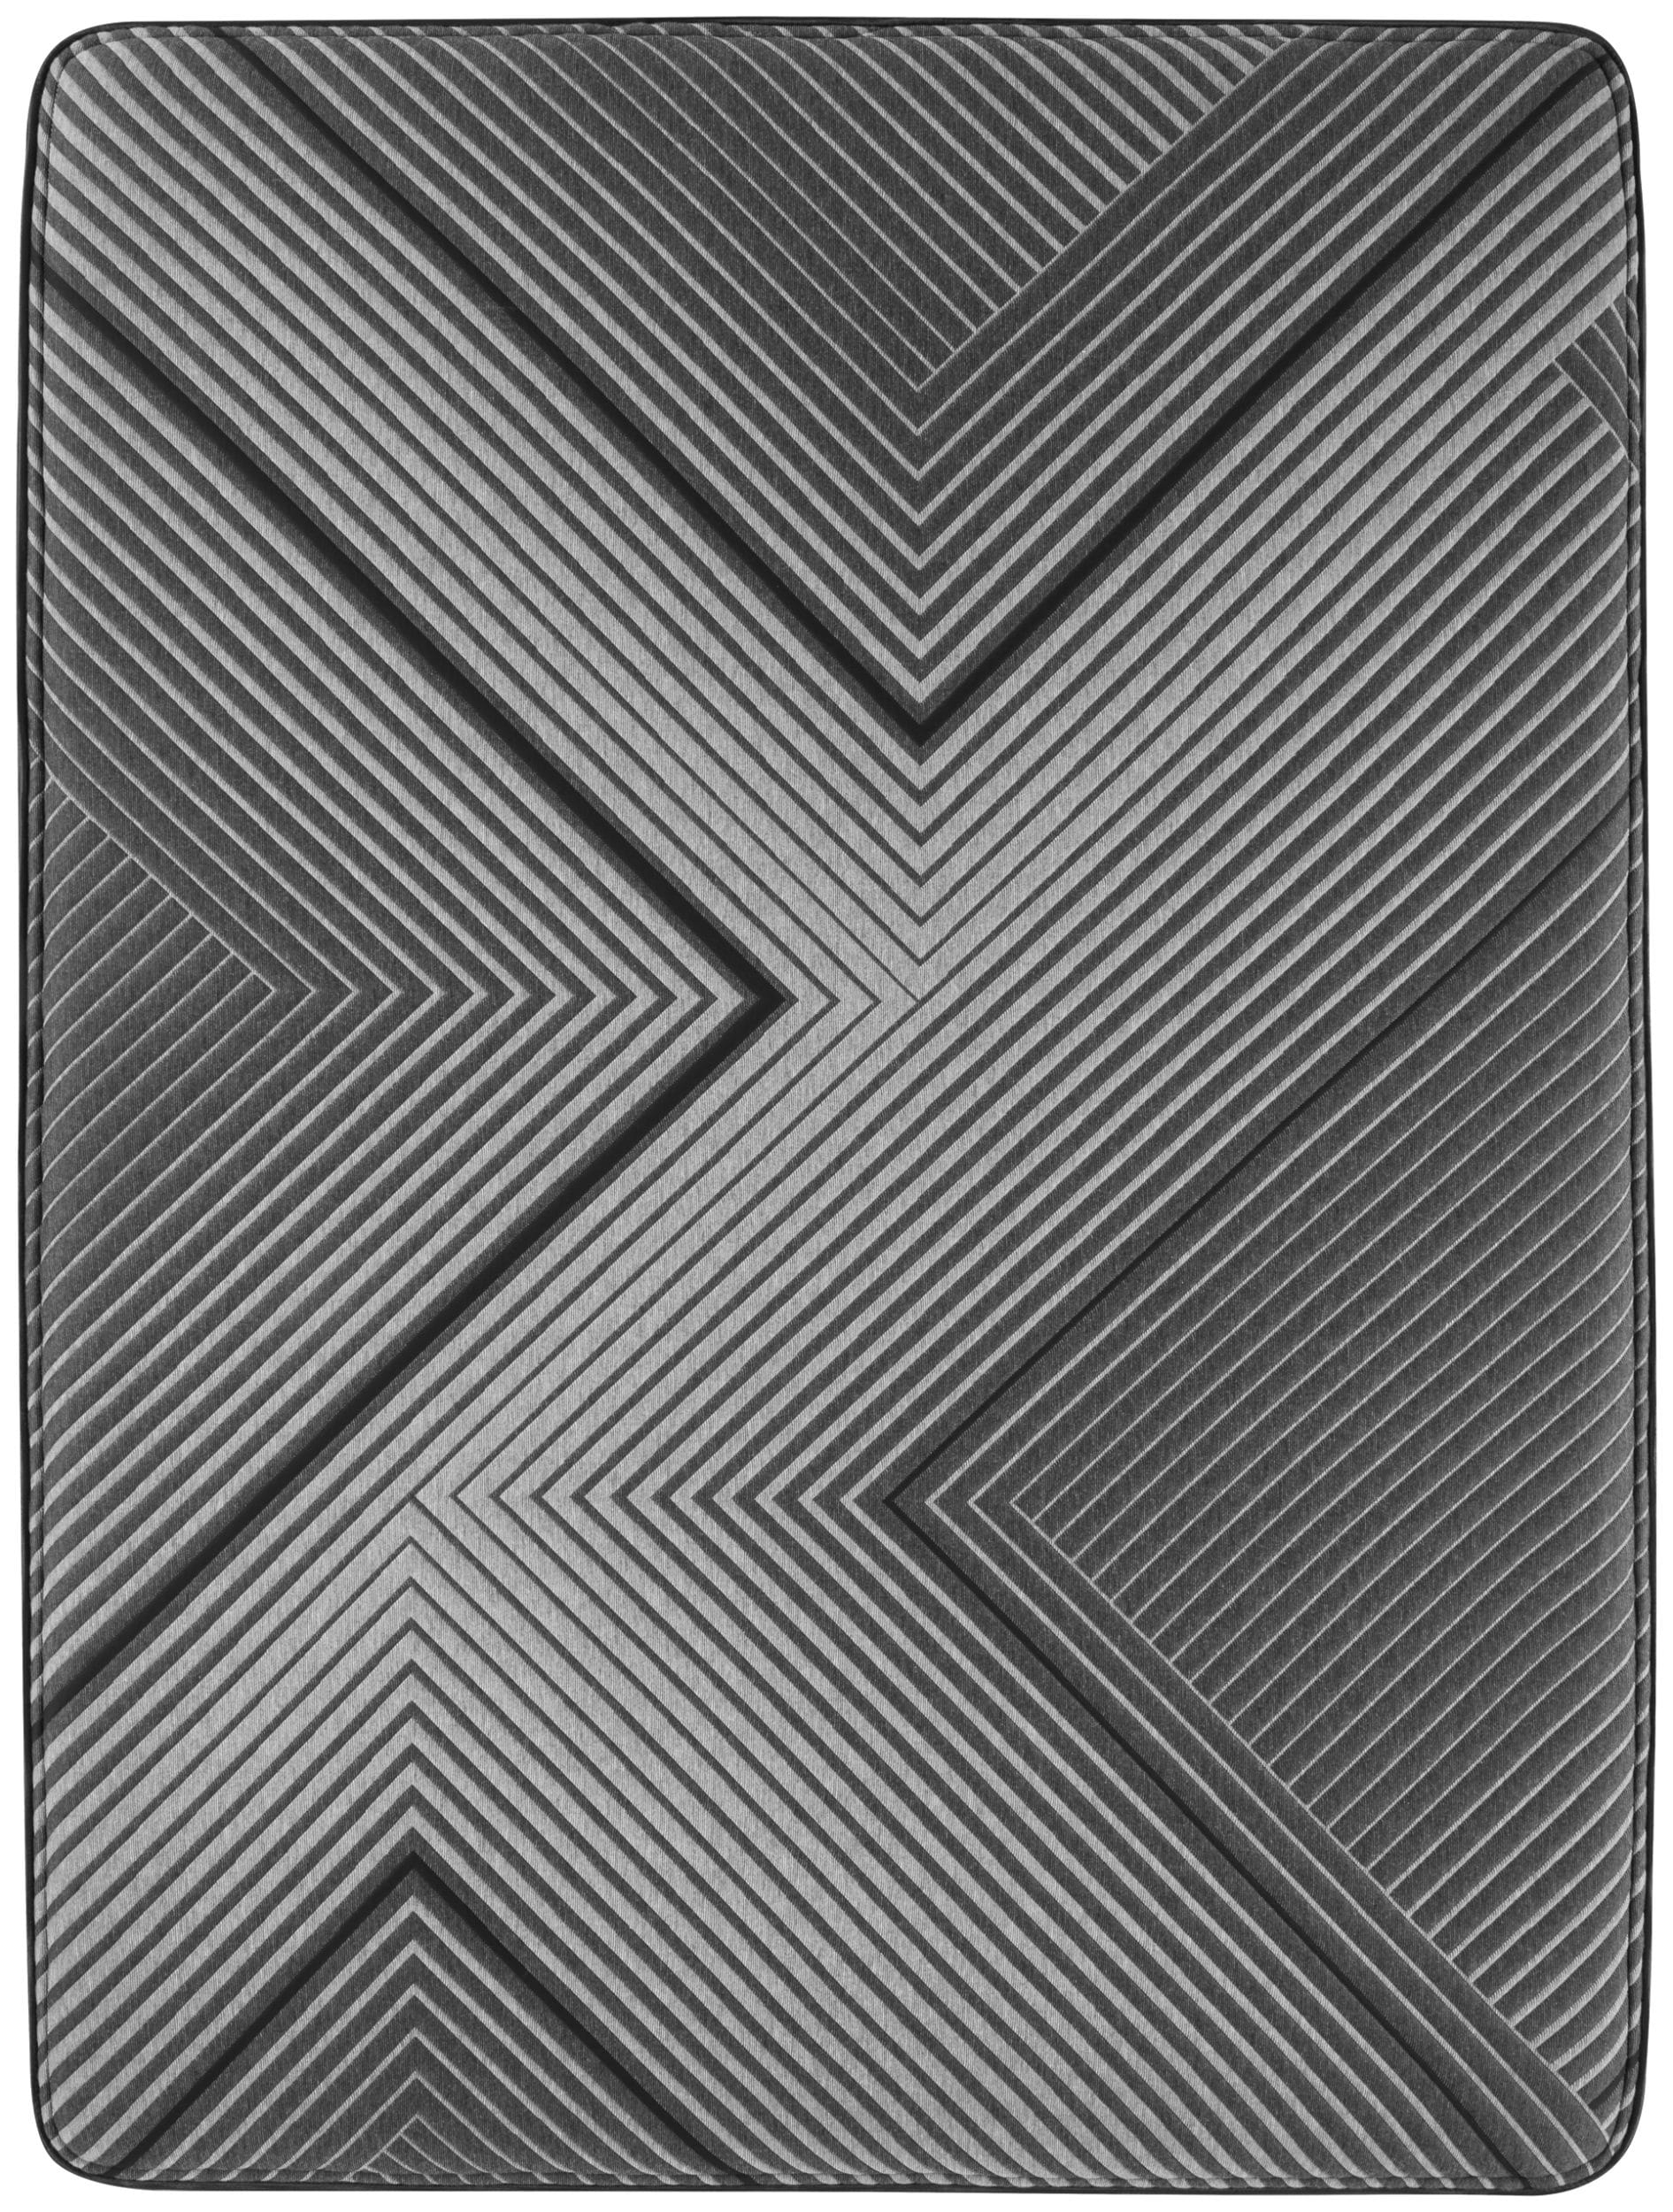 Close up of a black mattress with chevron pattern